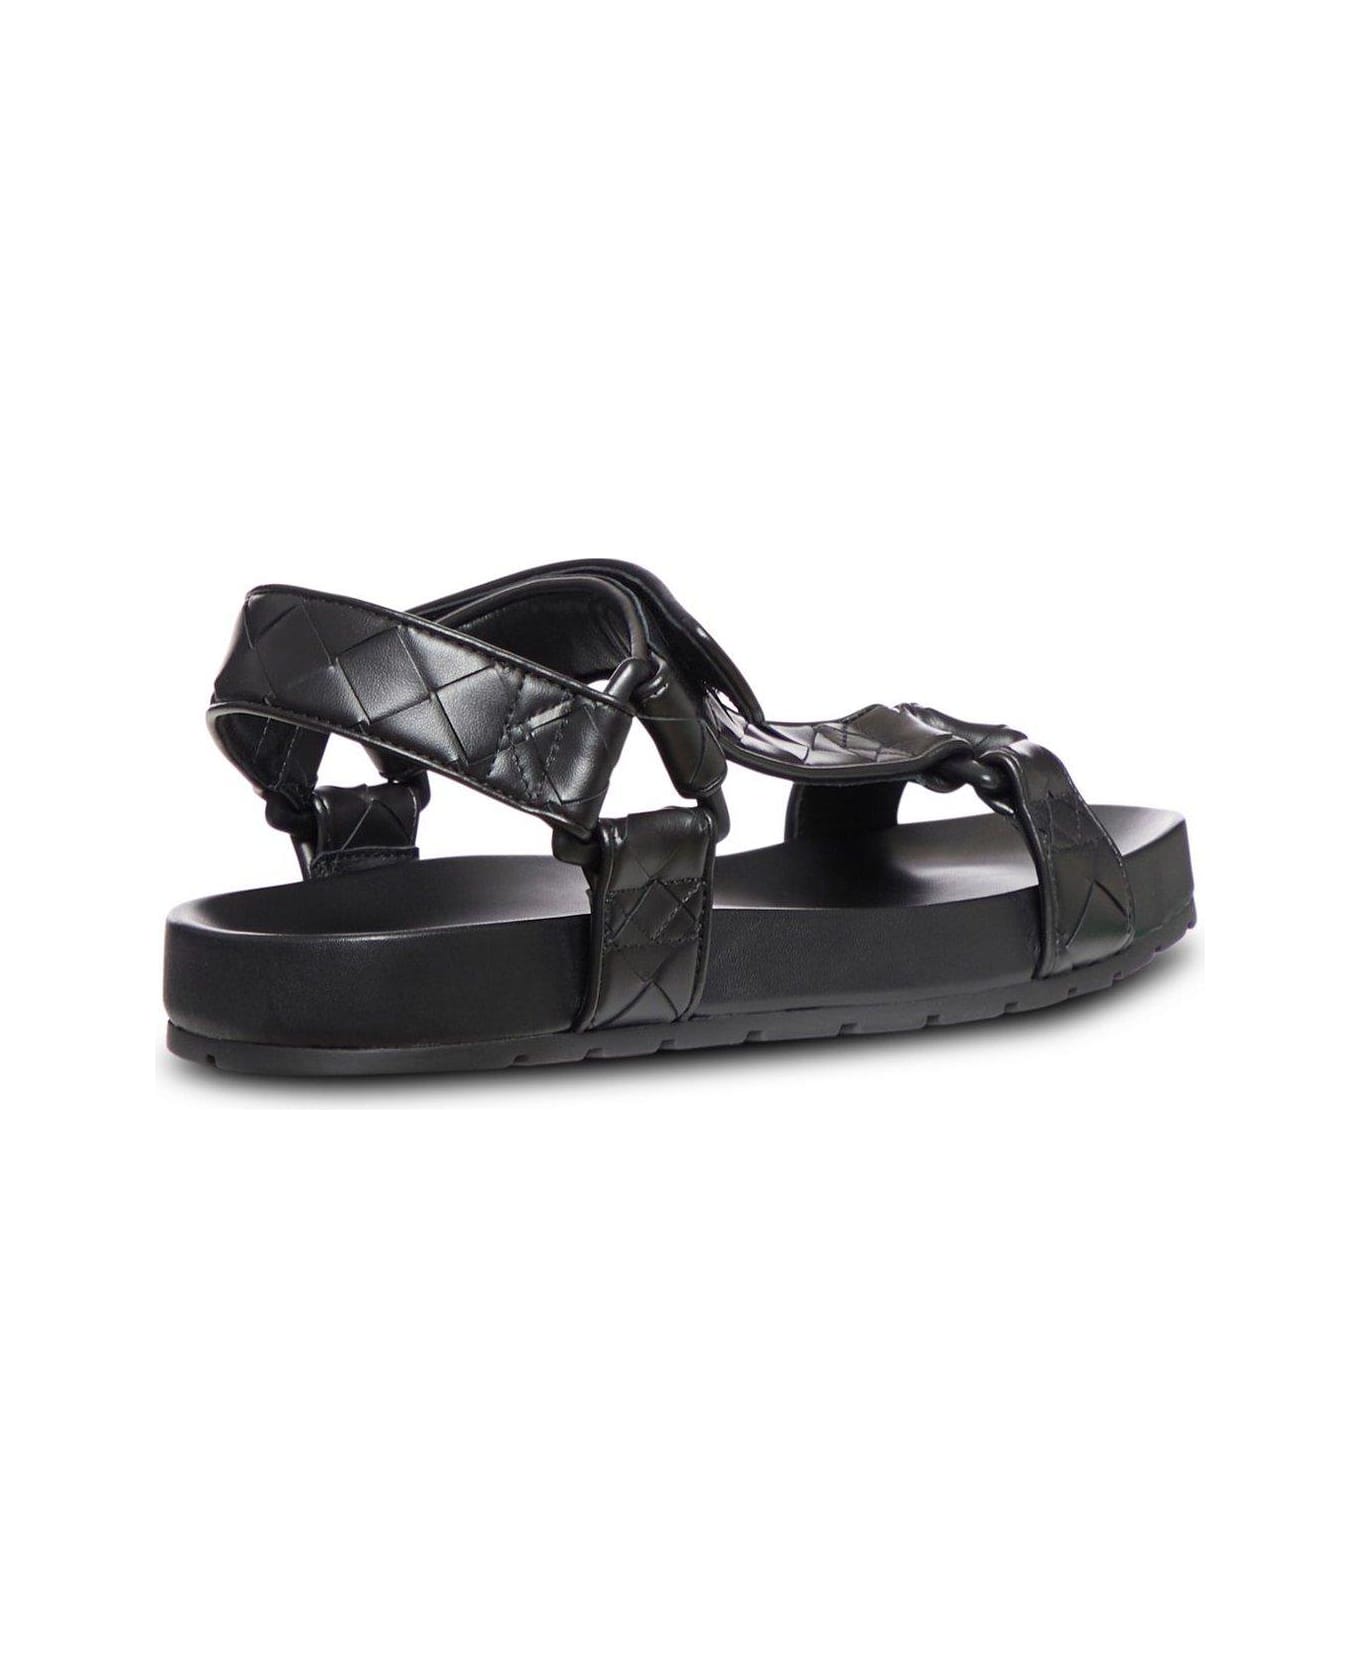 Bottega Veneta Trip Sandals - Black その他各種シューズ